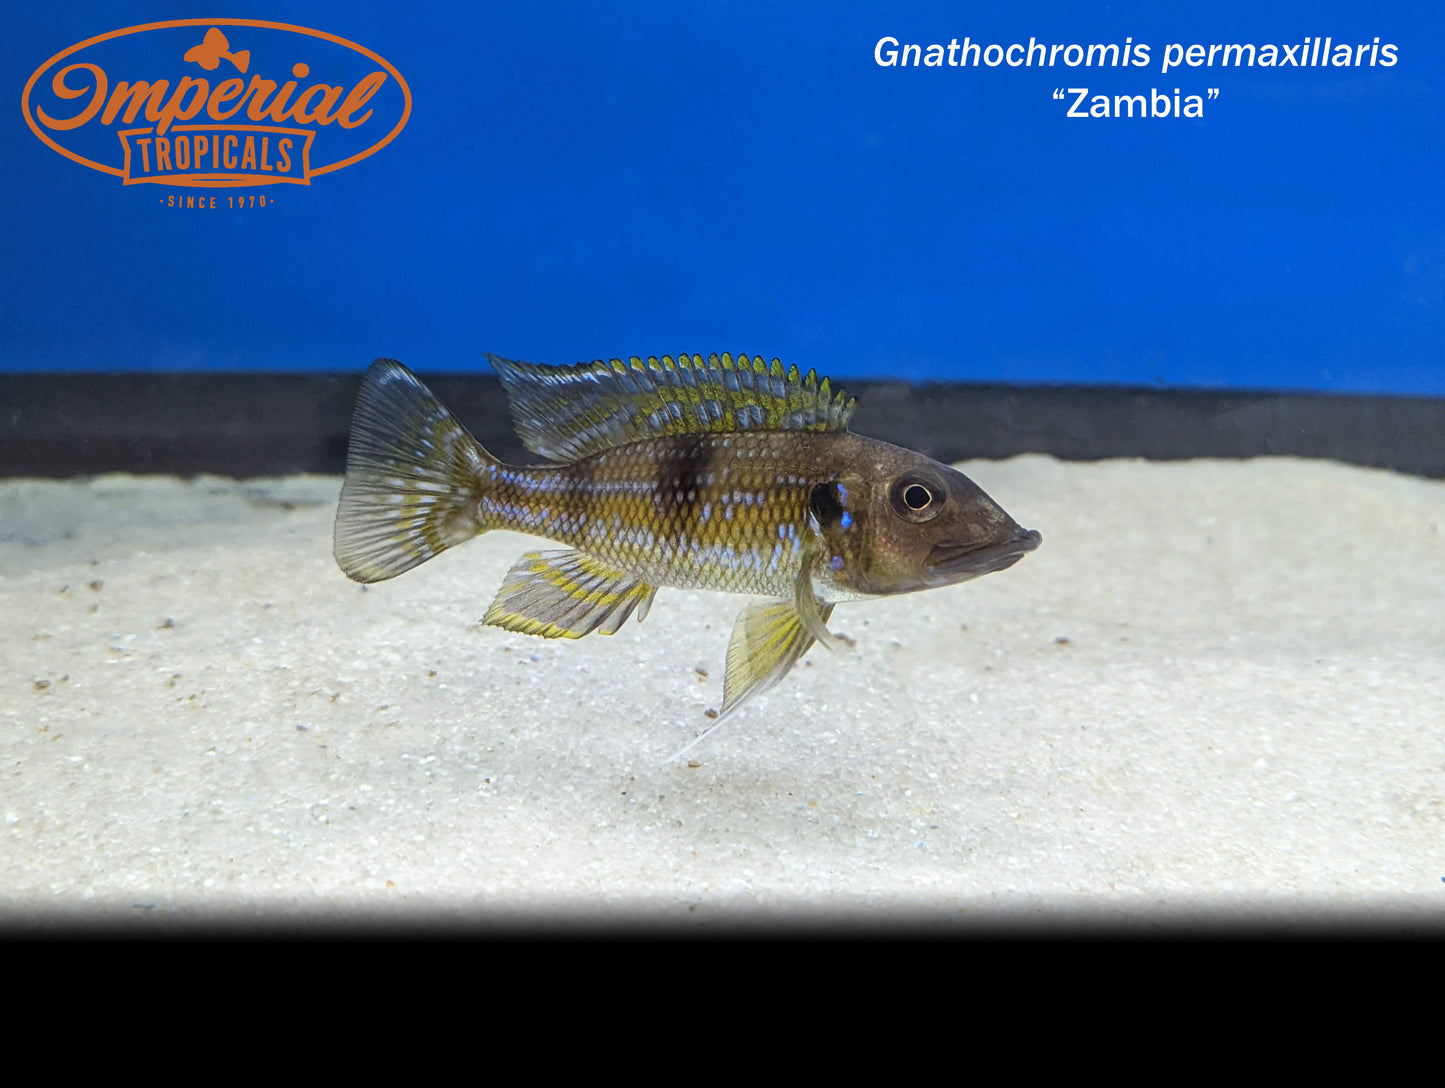 Gnathochromis permaxillaris "Zambia"